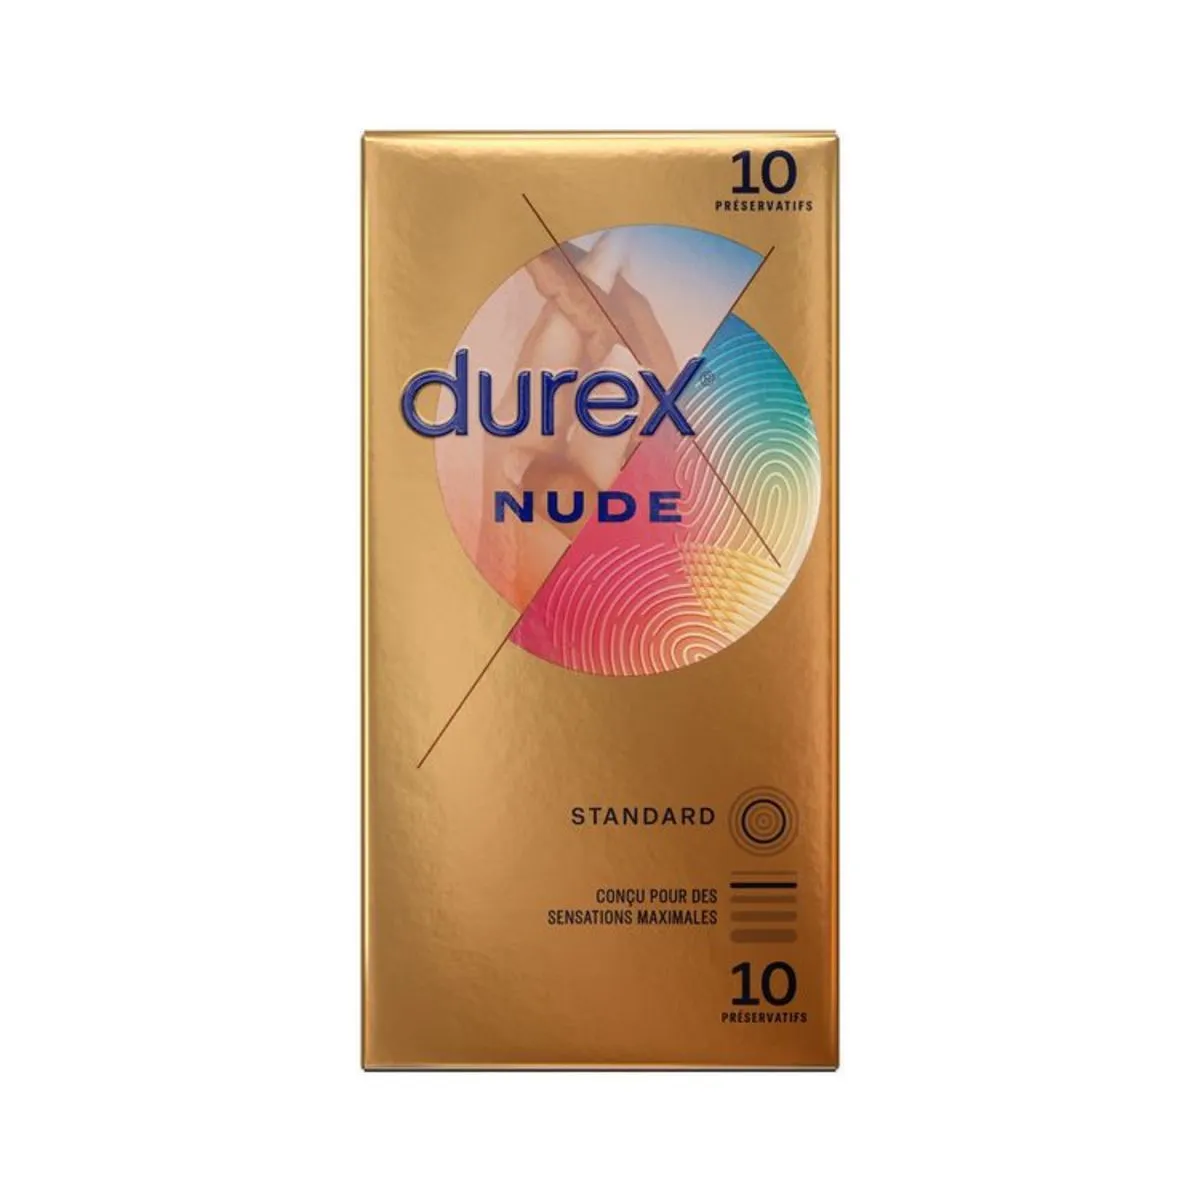 preservatifs nude original durex